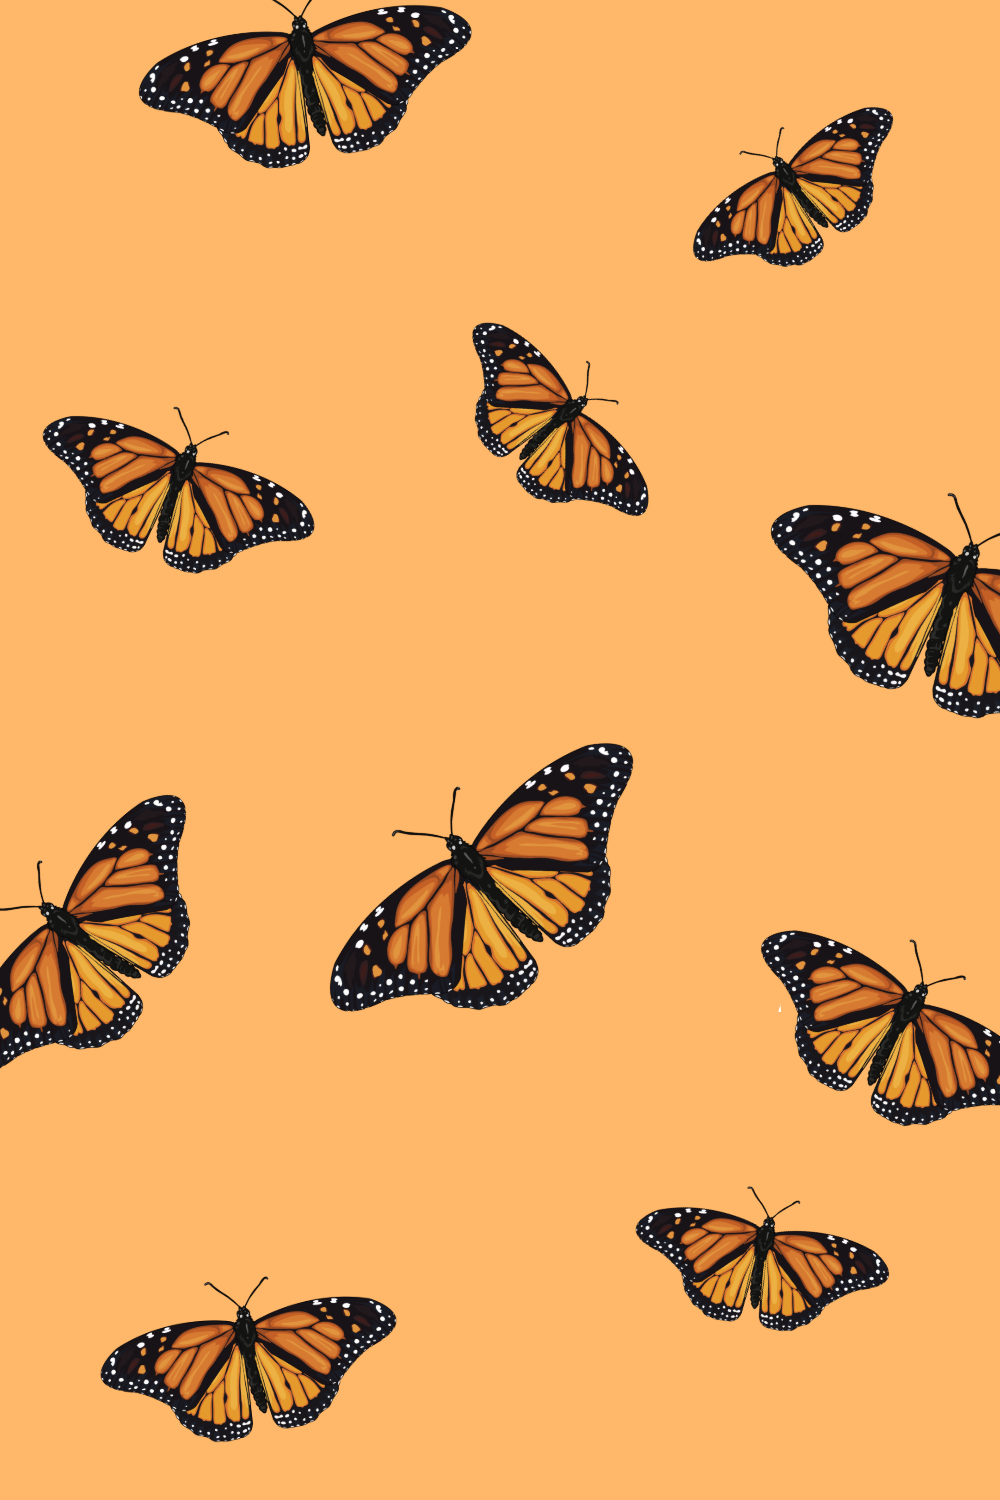 Aesthetic Butterflies Wallpapers Wallpaper Cave